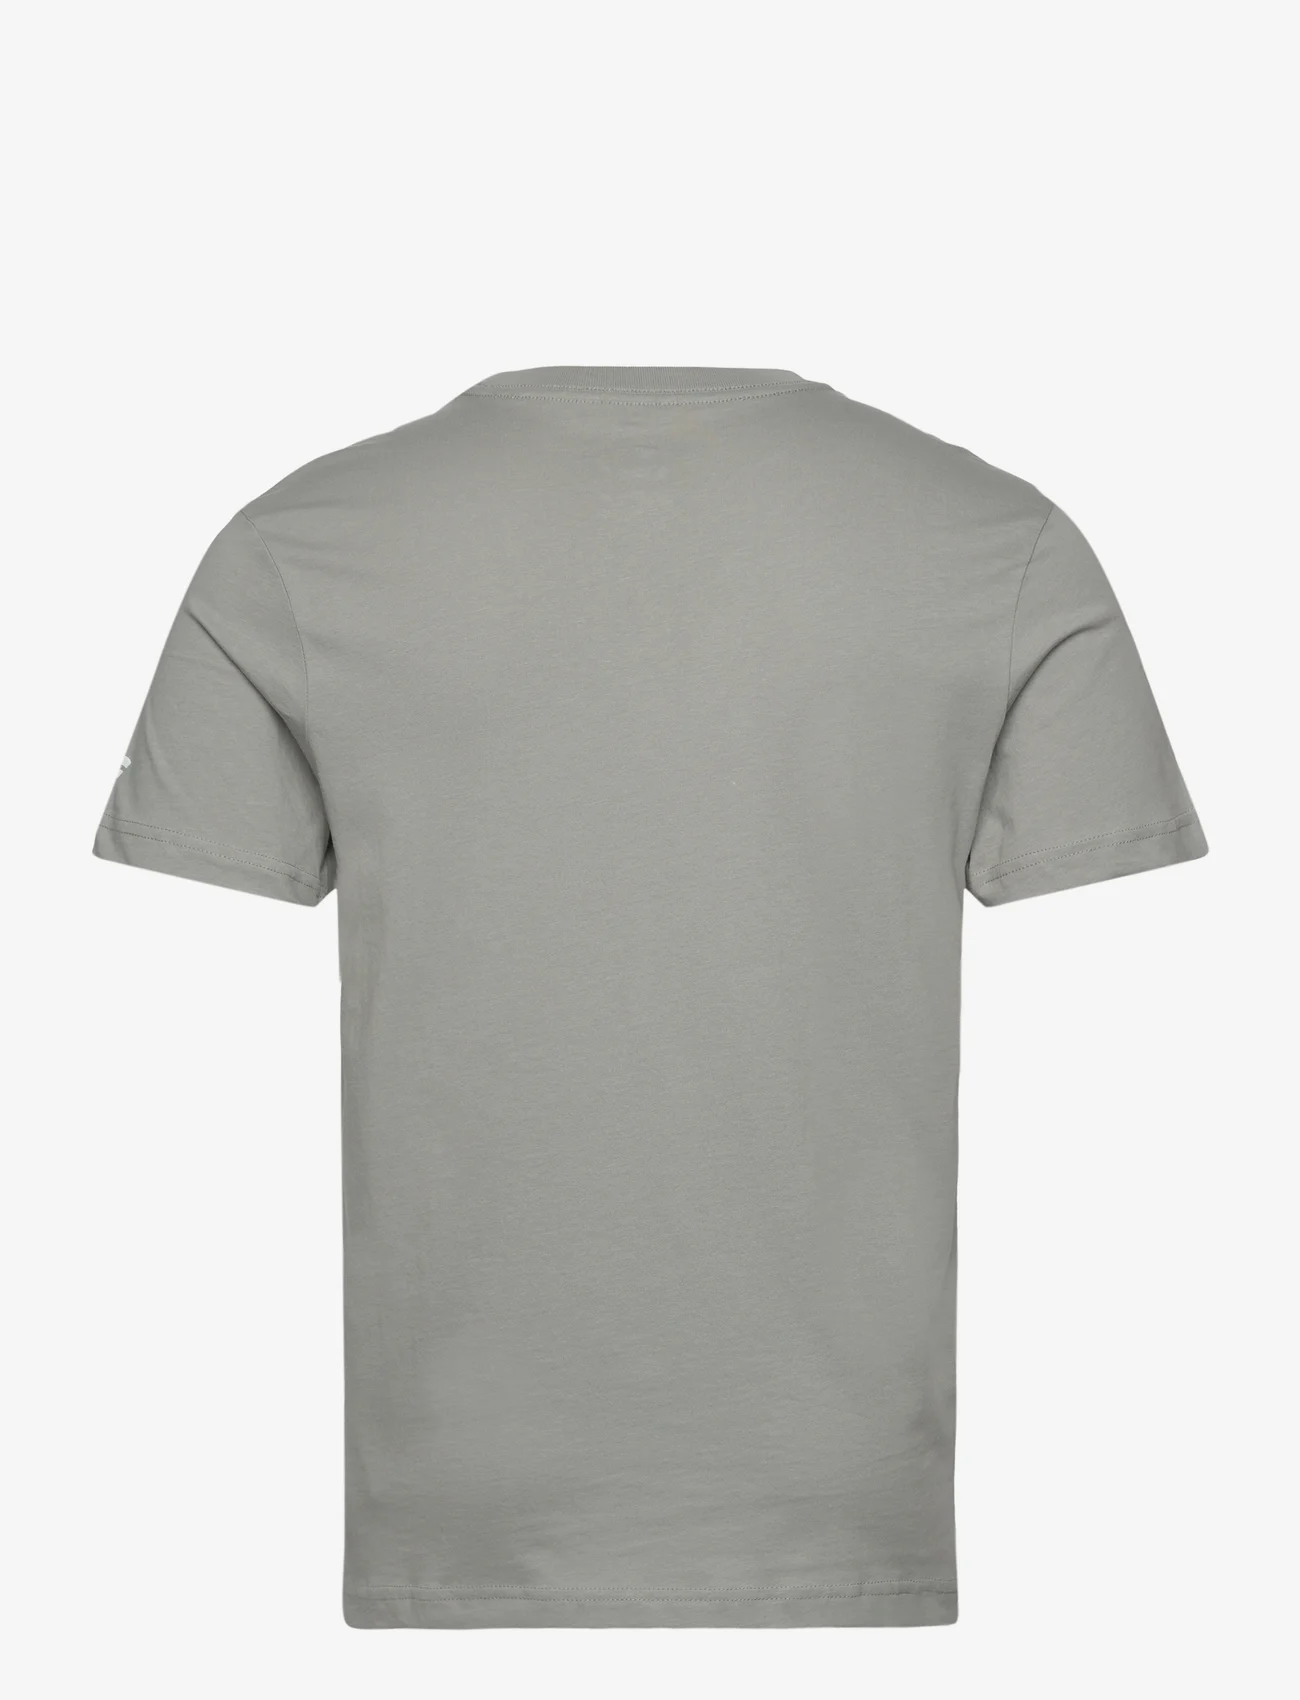 Fanatics - New York Yankees Primary Logo Graphic T-Shirt - lowest prices - stone gray - 1